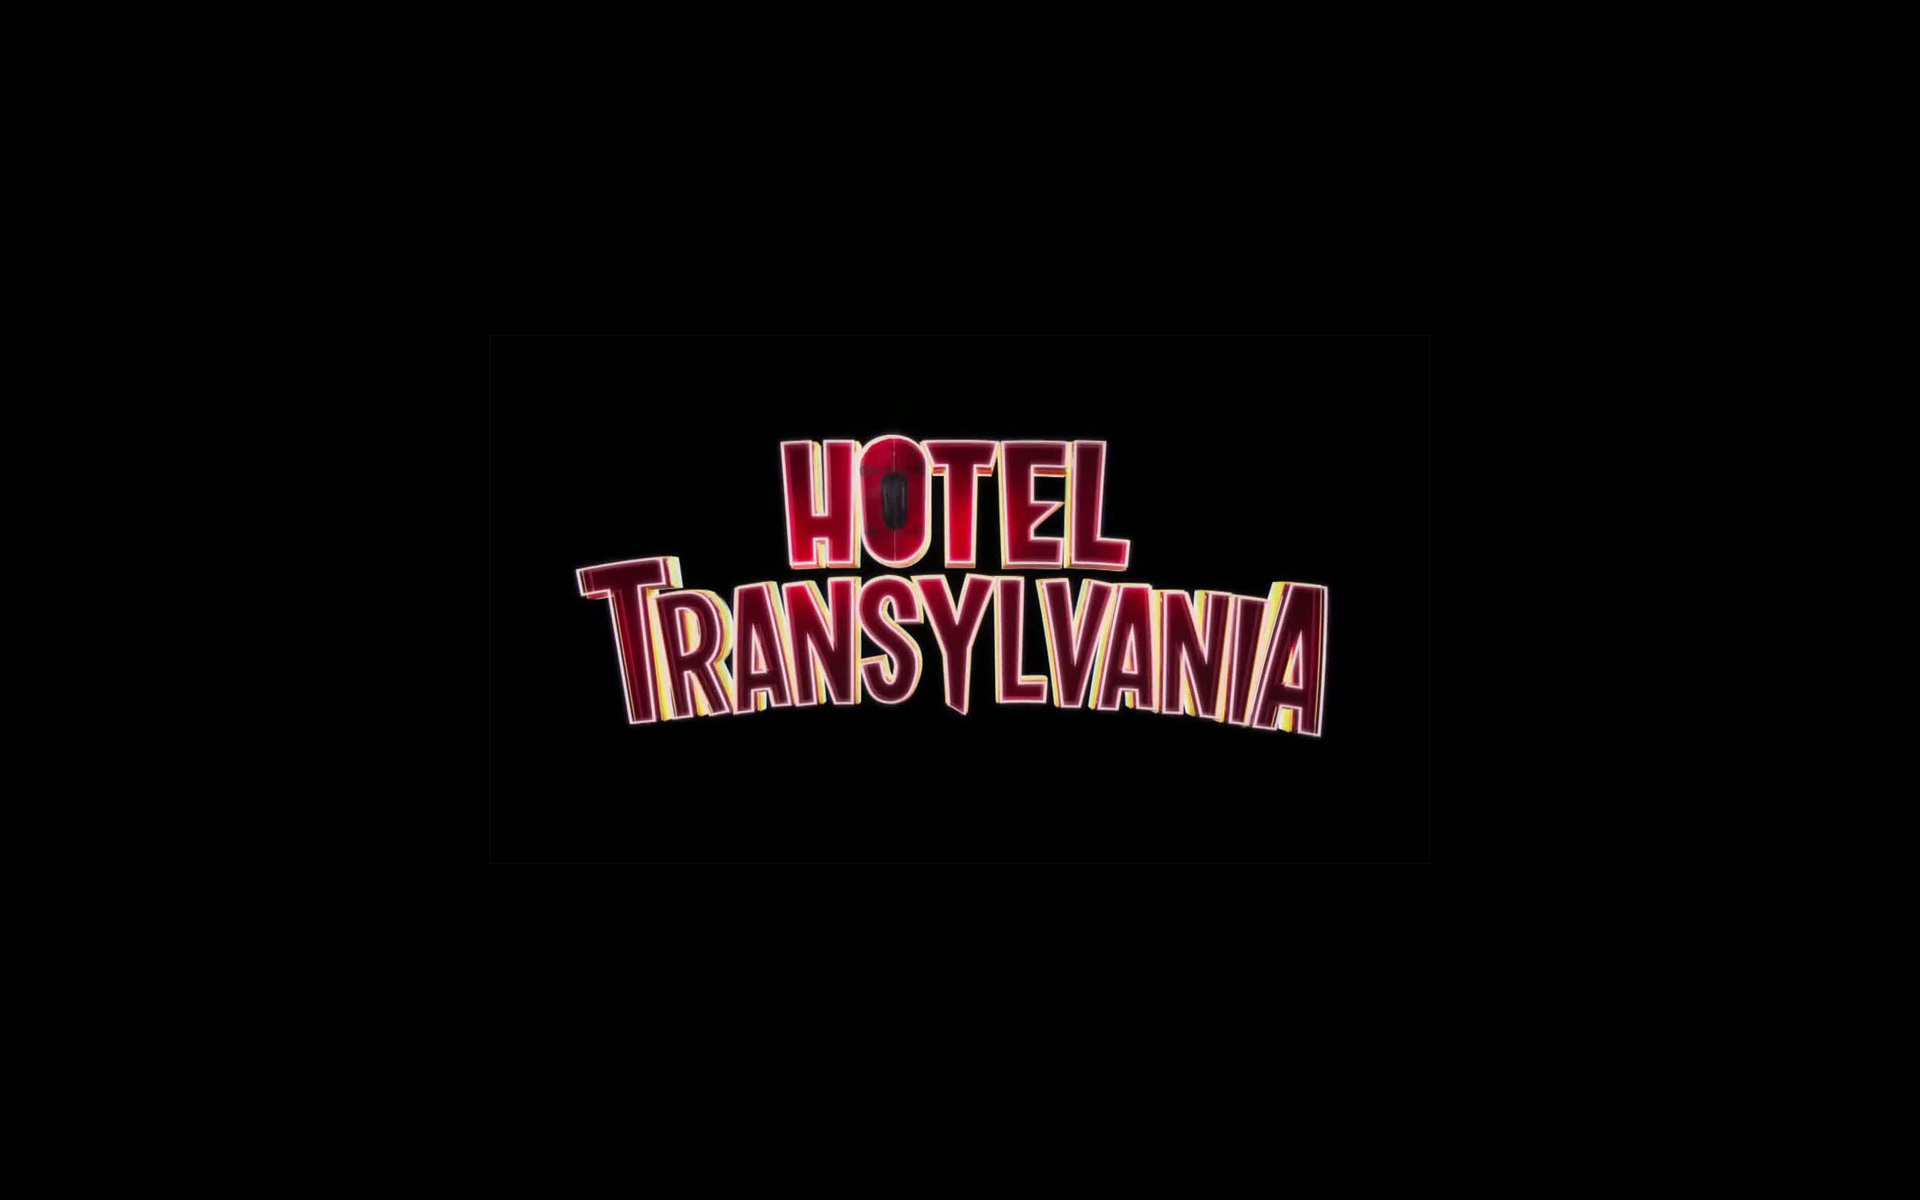 Hotel Transylvania Computer Wallpapers, Desktop Backgrounds | 1920x1200 ...